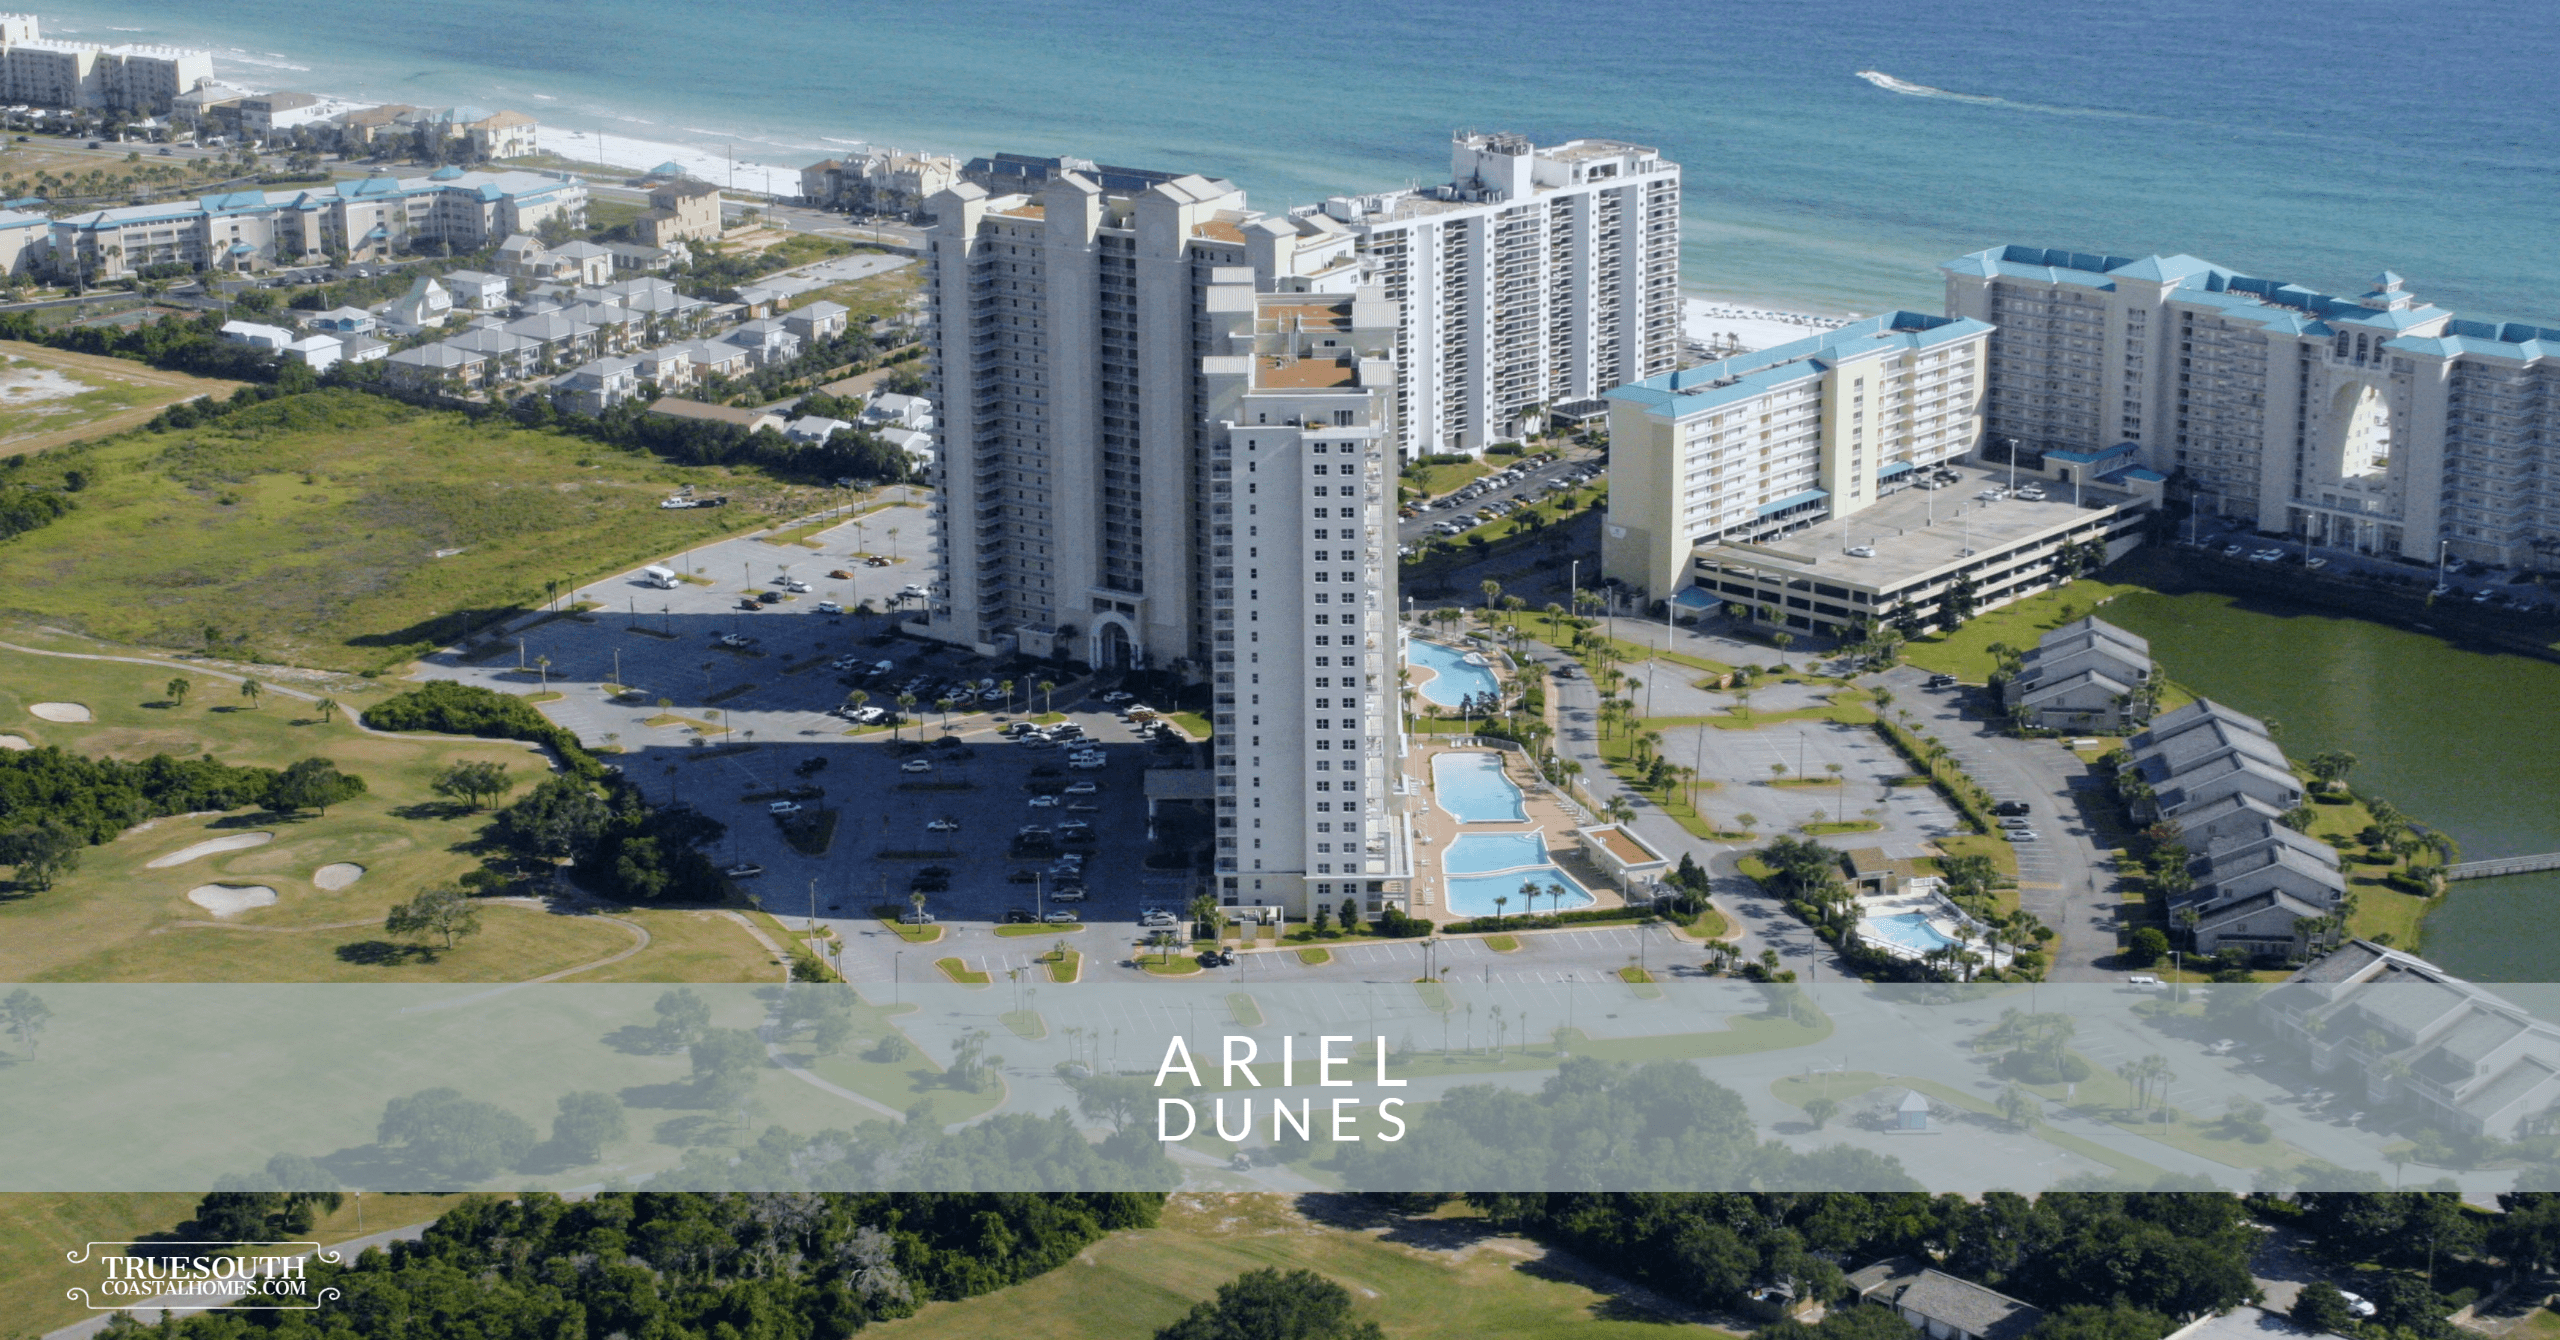 Ariel Dunes Condos for Sale, Miramar Beach FL